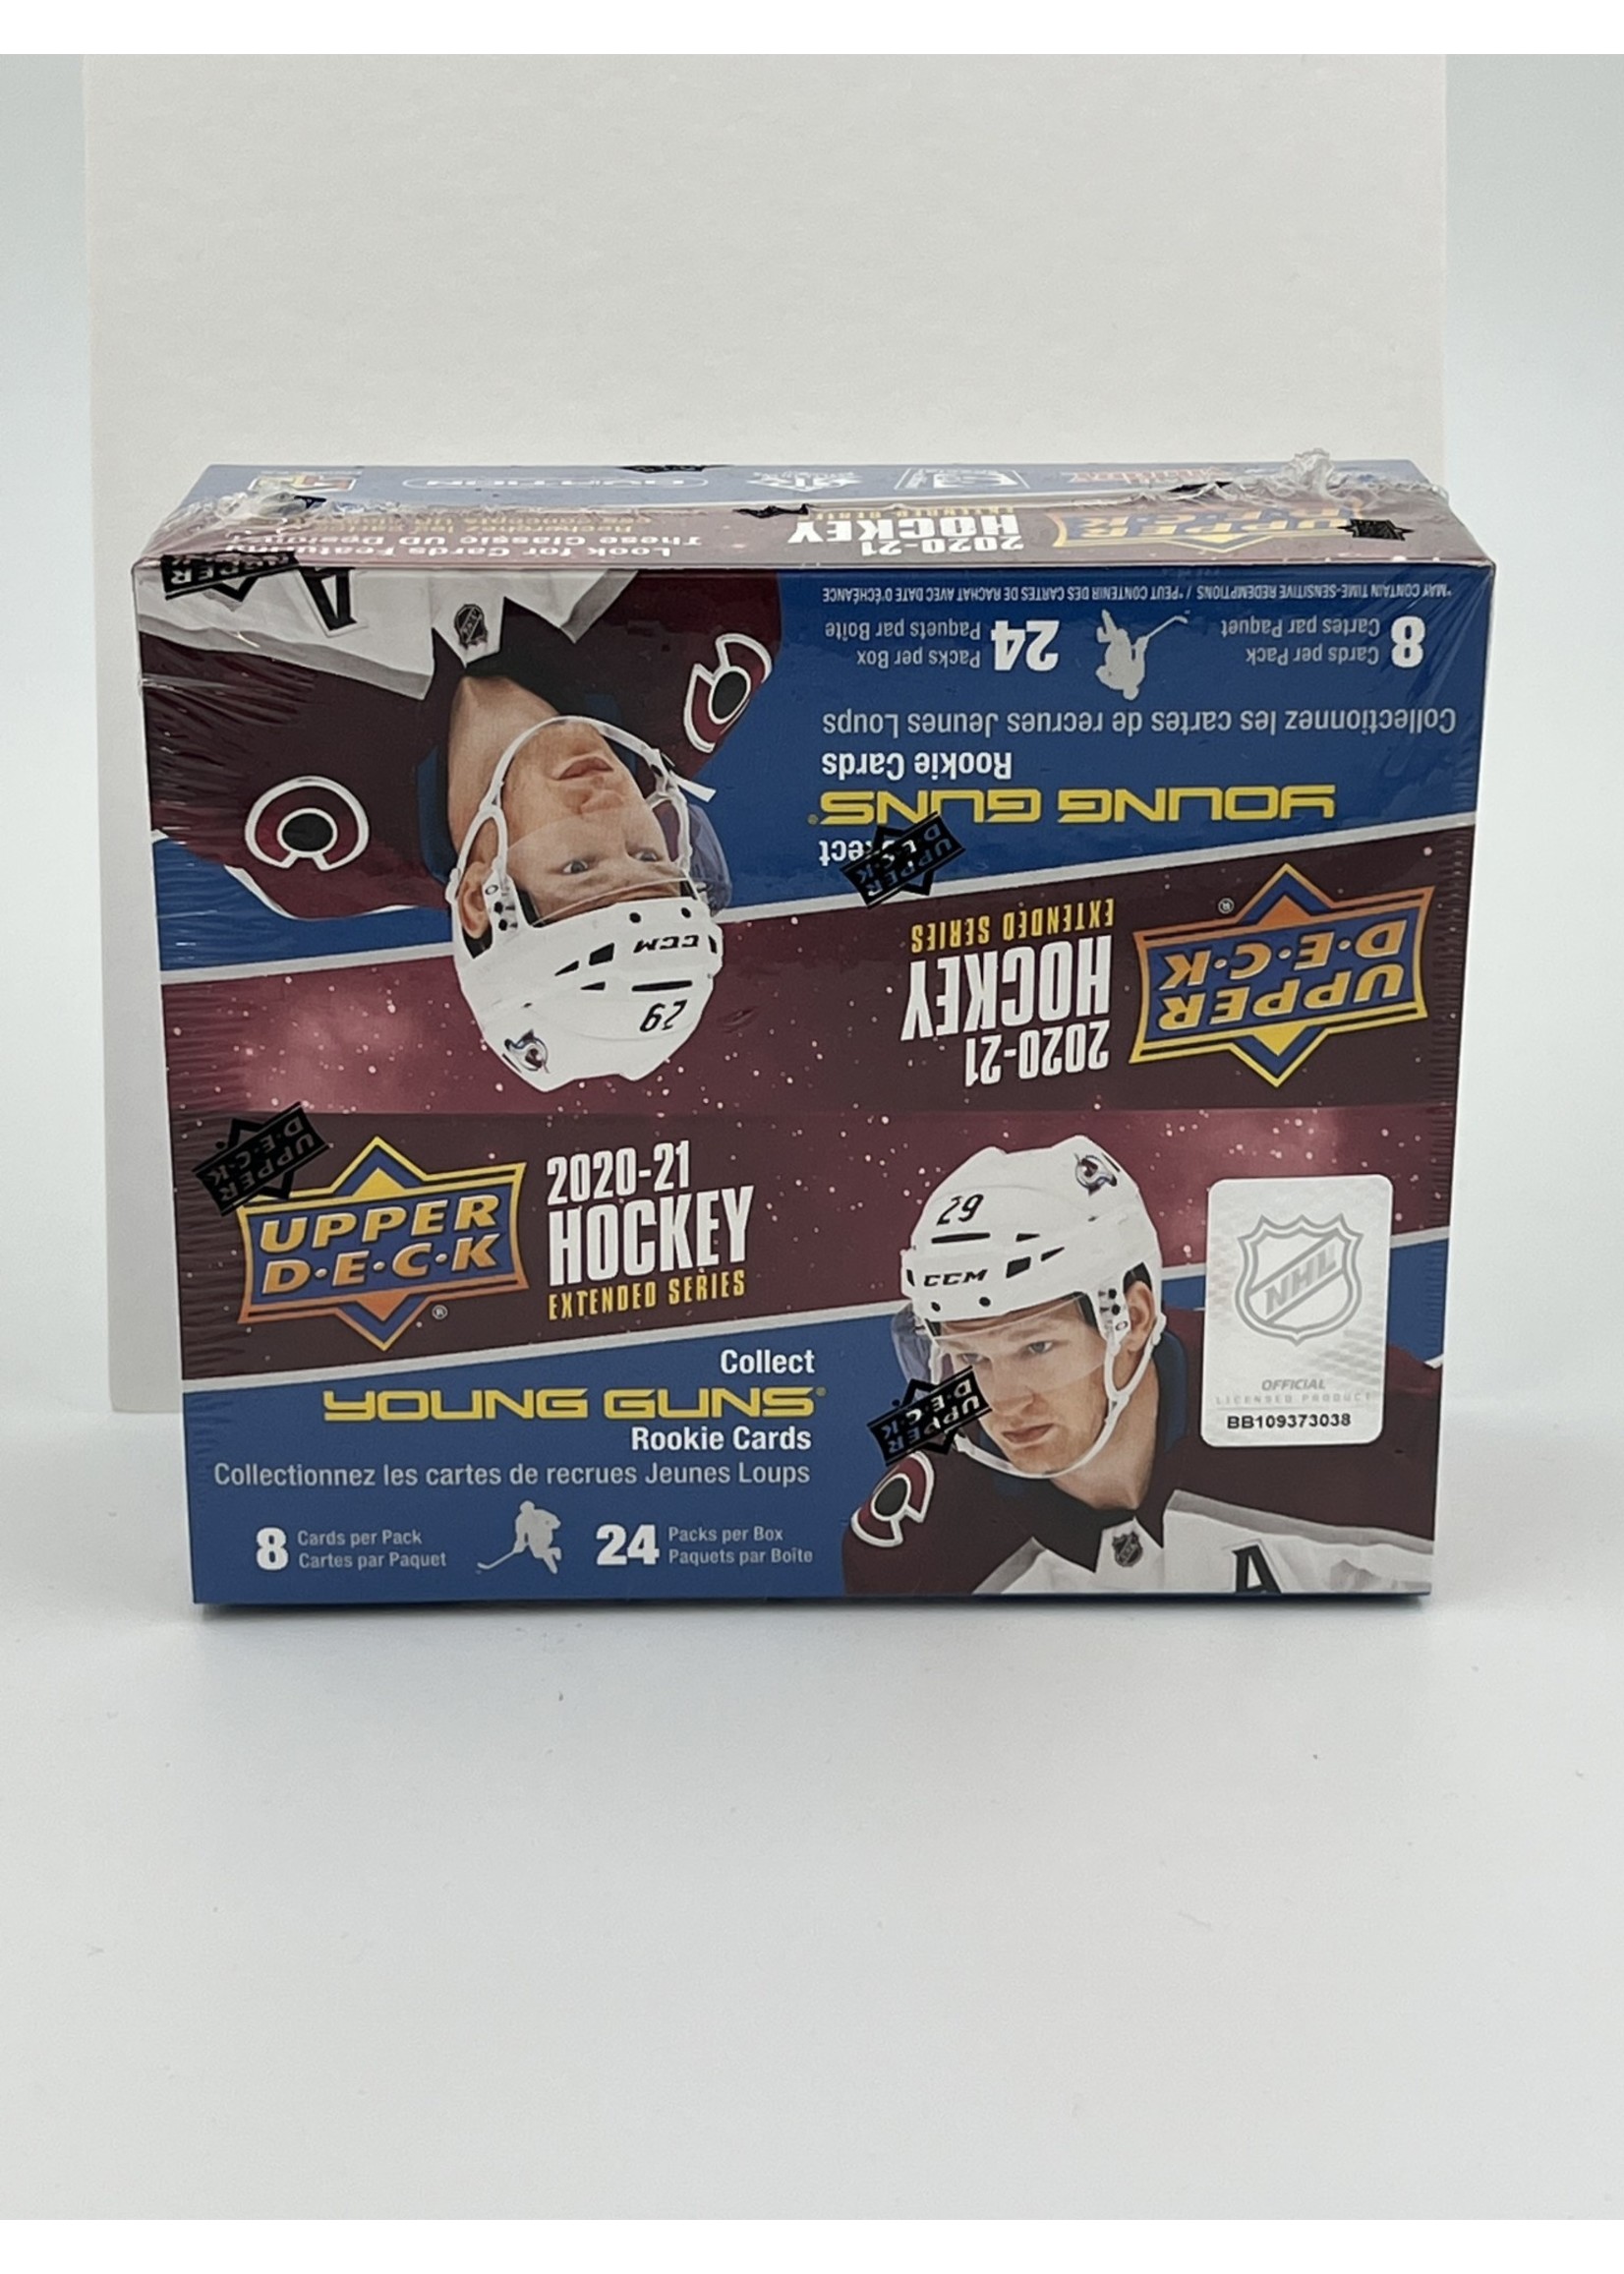 Upper Deck   2020 21 Upper Deck Hockey Extended Series Retail Wax Box